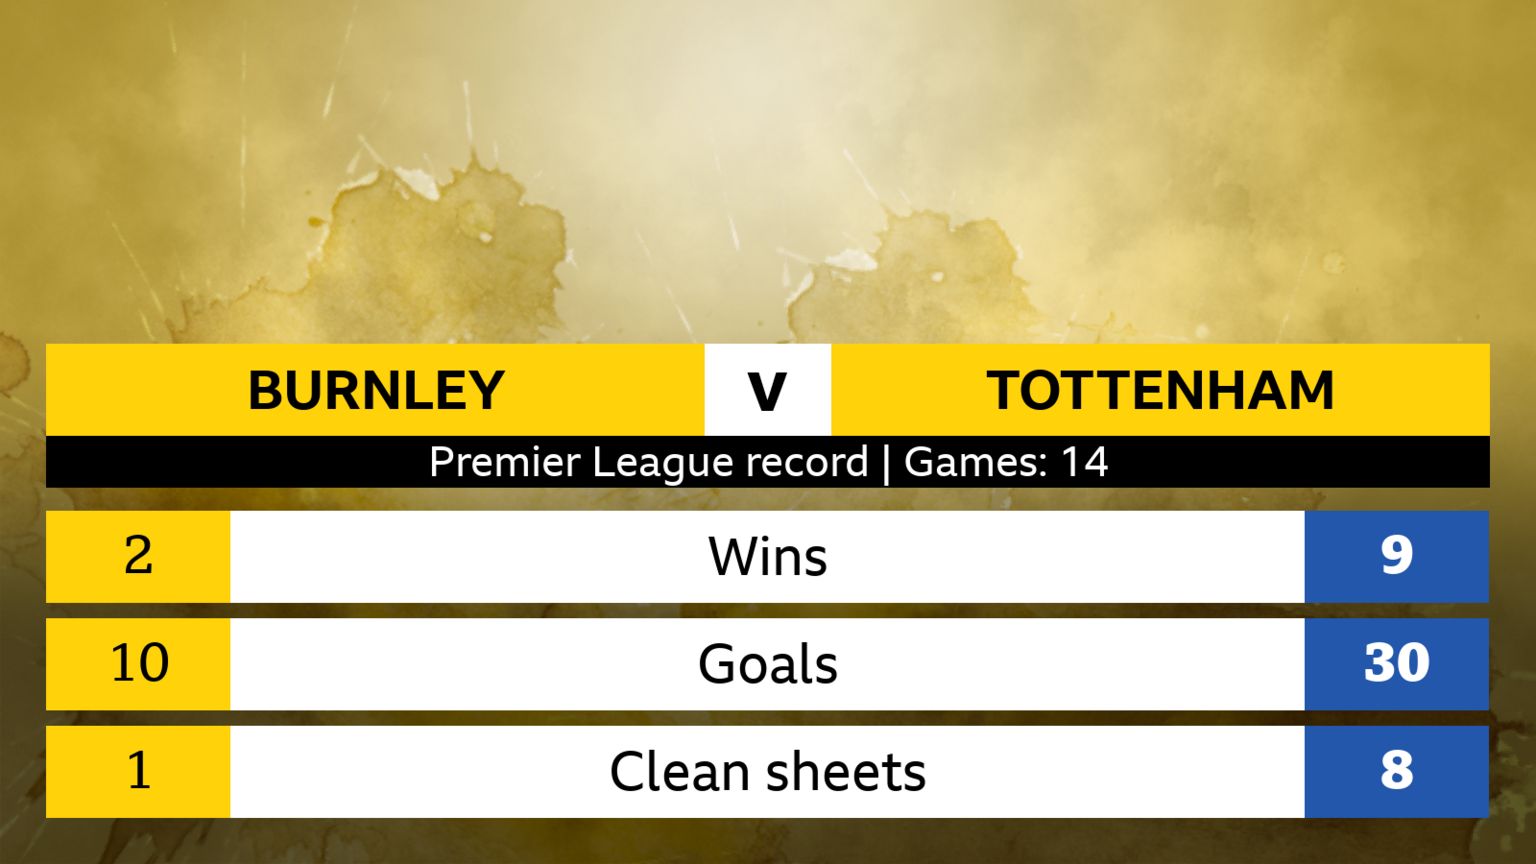 Premier League record, 14 games. Burnley; 2 wins, 10 goals, 1 clean sheet. Tottenham; 9 wins, 30 goals, 8 clean sheets